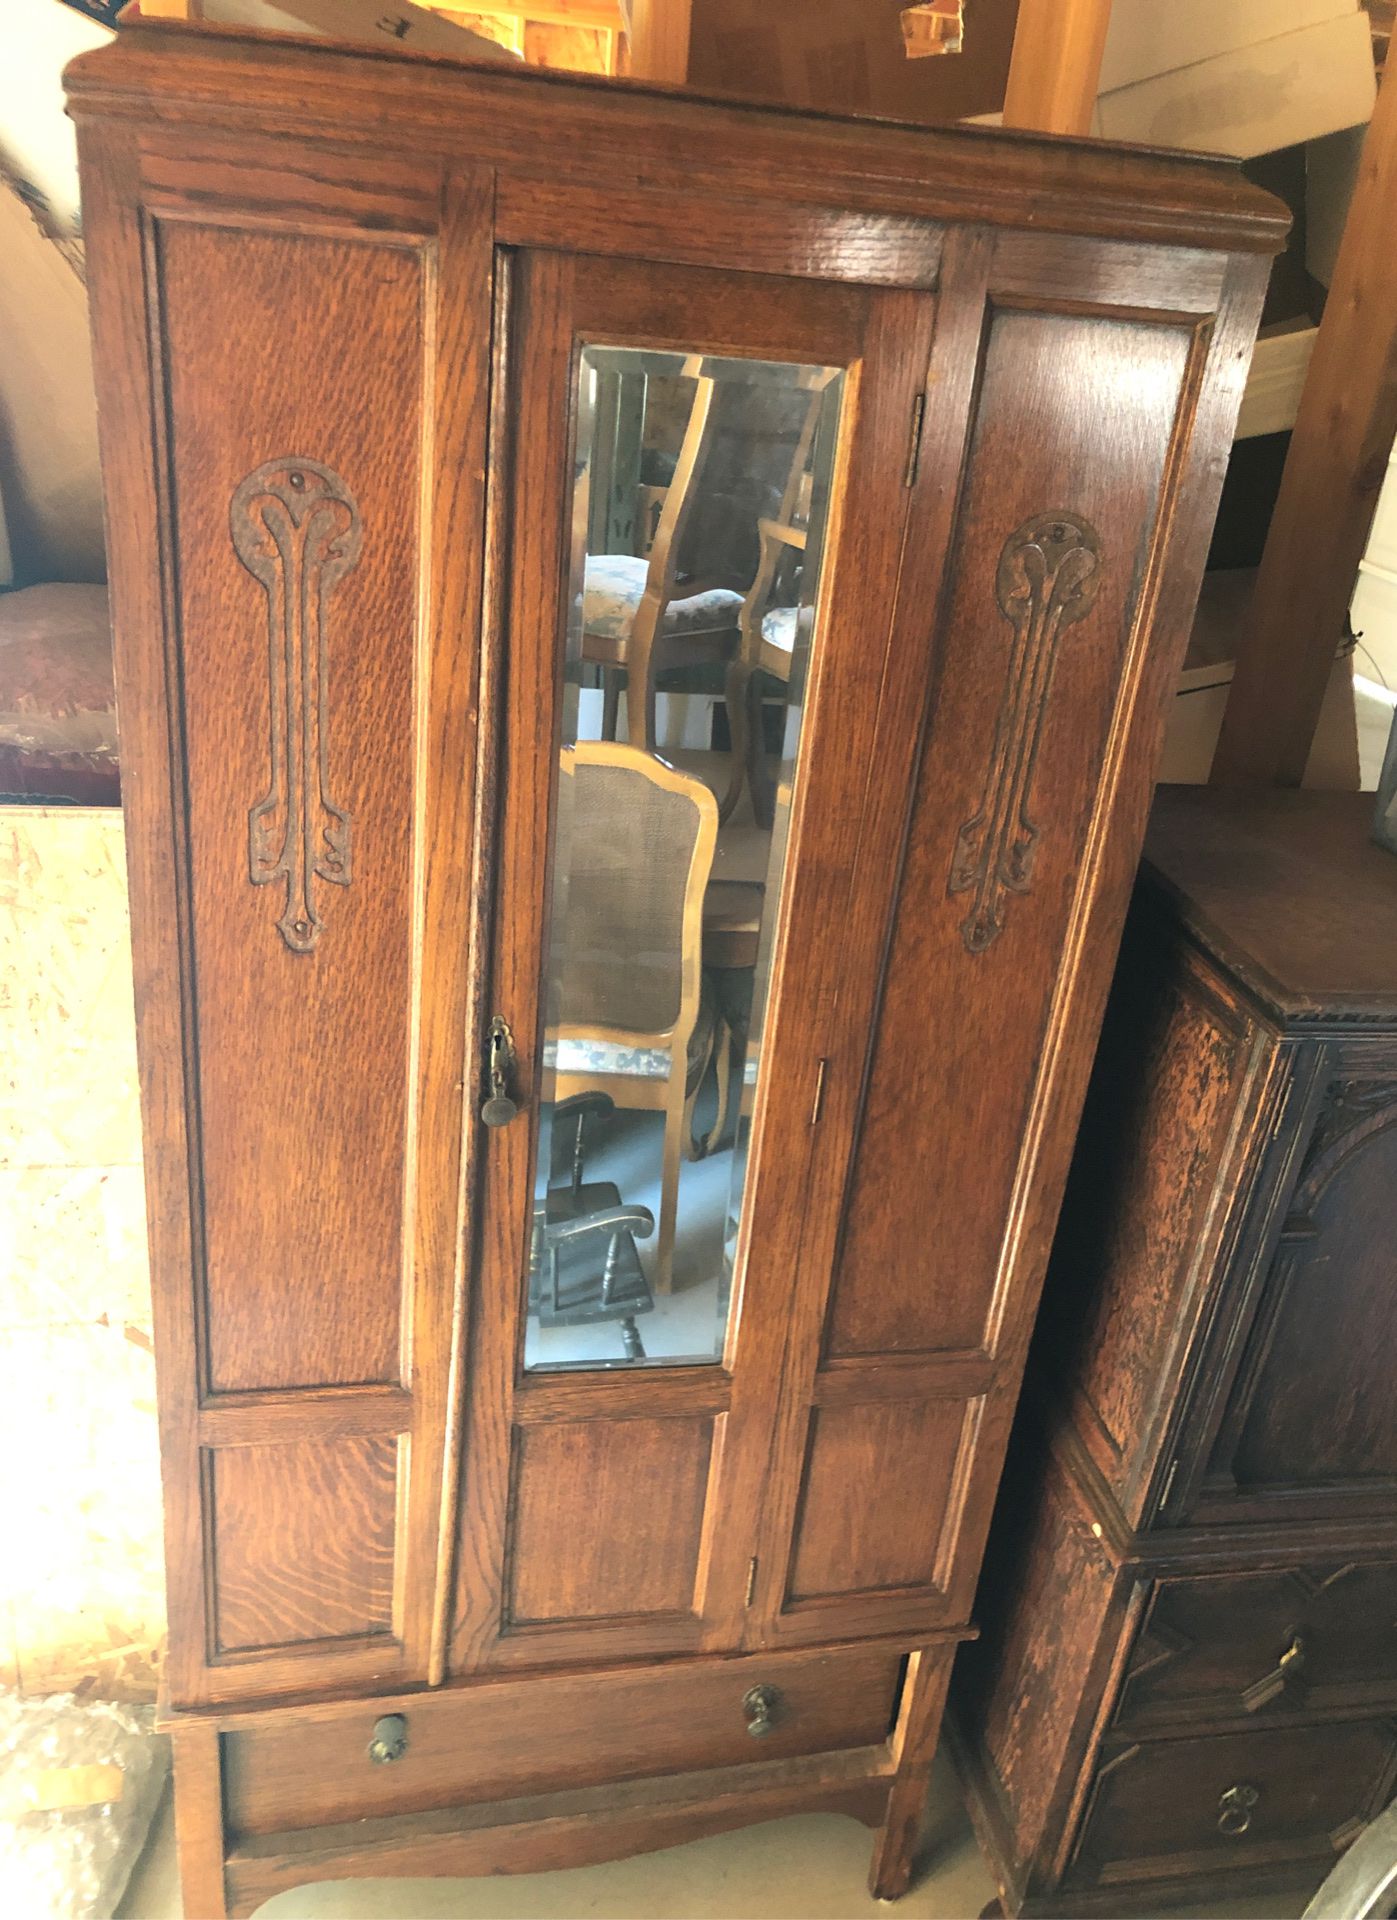 Antique wardrobe armoire